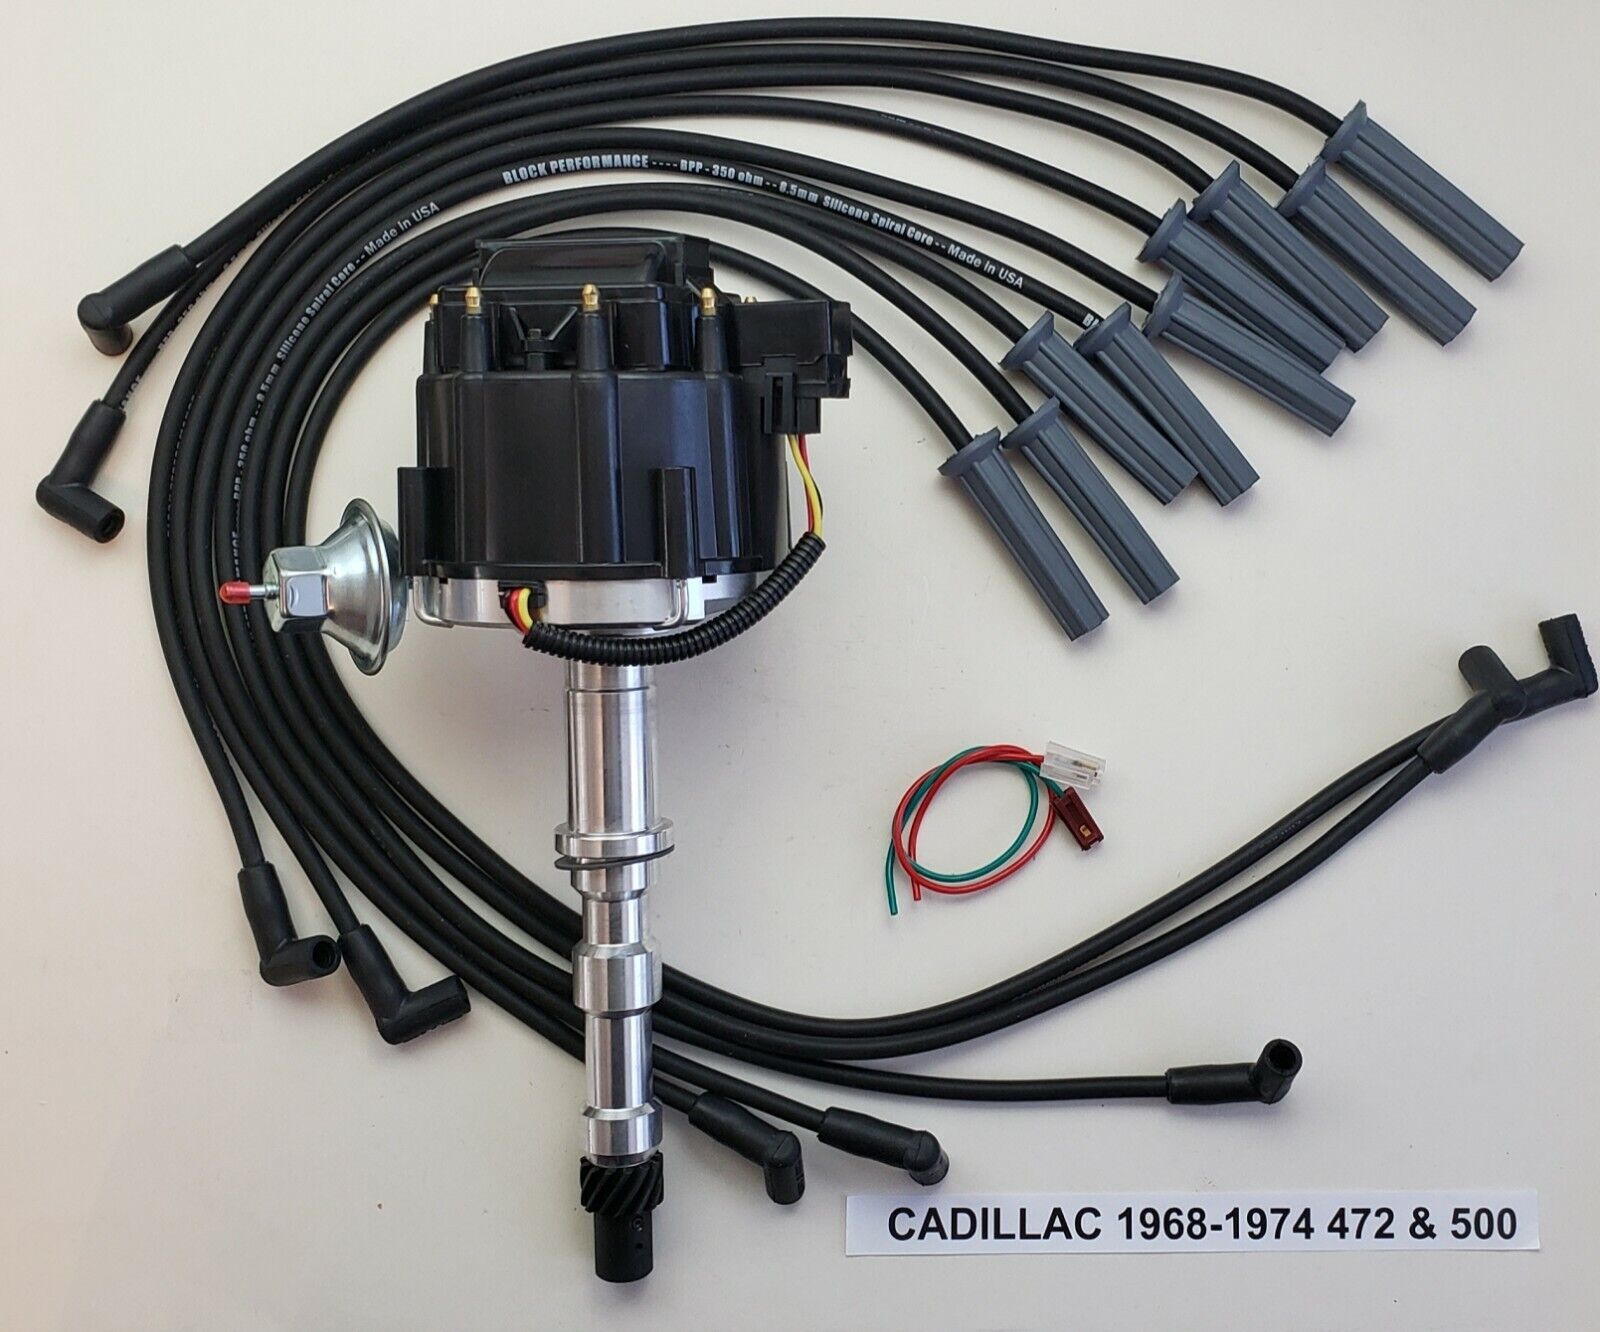 CADILLAC 1968-1974 472 500 HEI DISTRIBUTOR + BLACK 8.5mm Spark Plug Wires USA